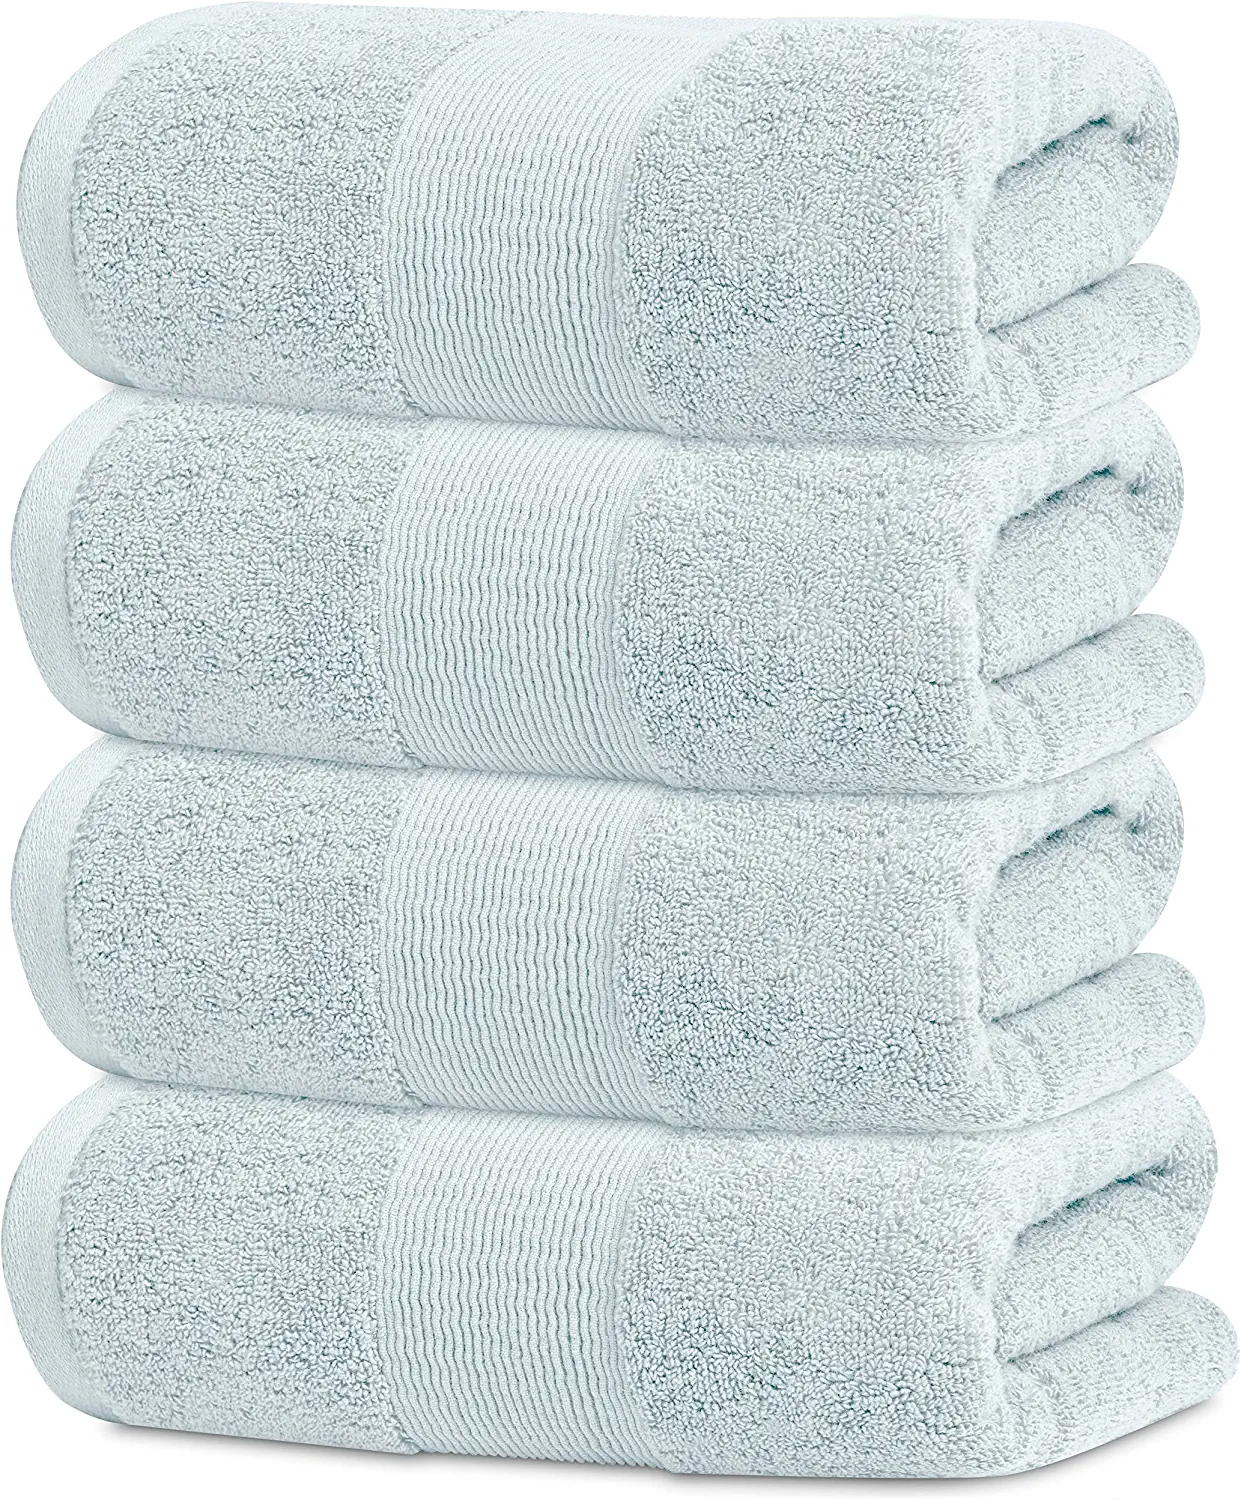 Chiicol Cotton Wash Cloths Absorbent Bath Washcloths for Body and Face -  Hotel Towels for Bathroom in Bulk. Durable Soft Bath Rags Wash Rag  (Multicolor)